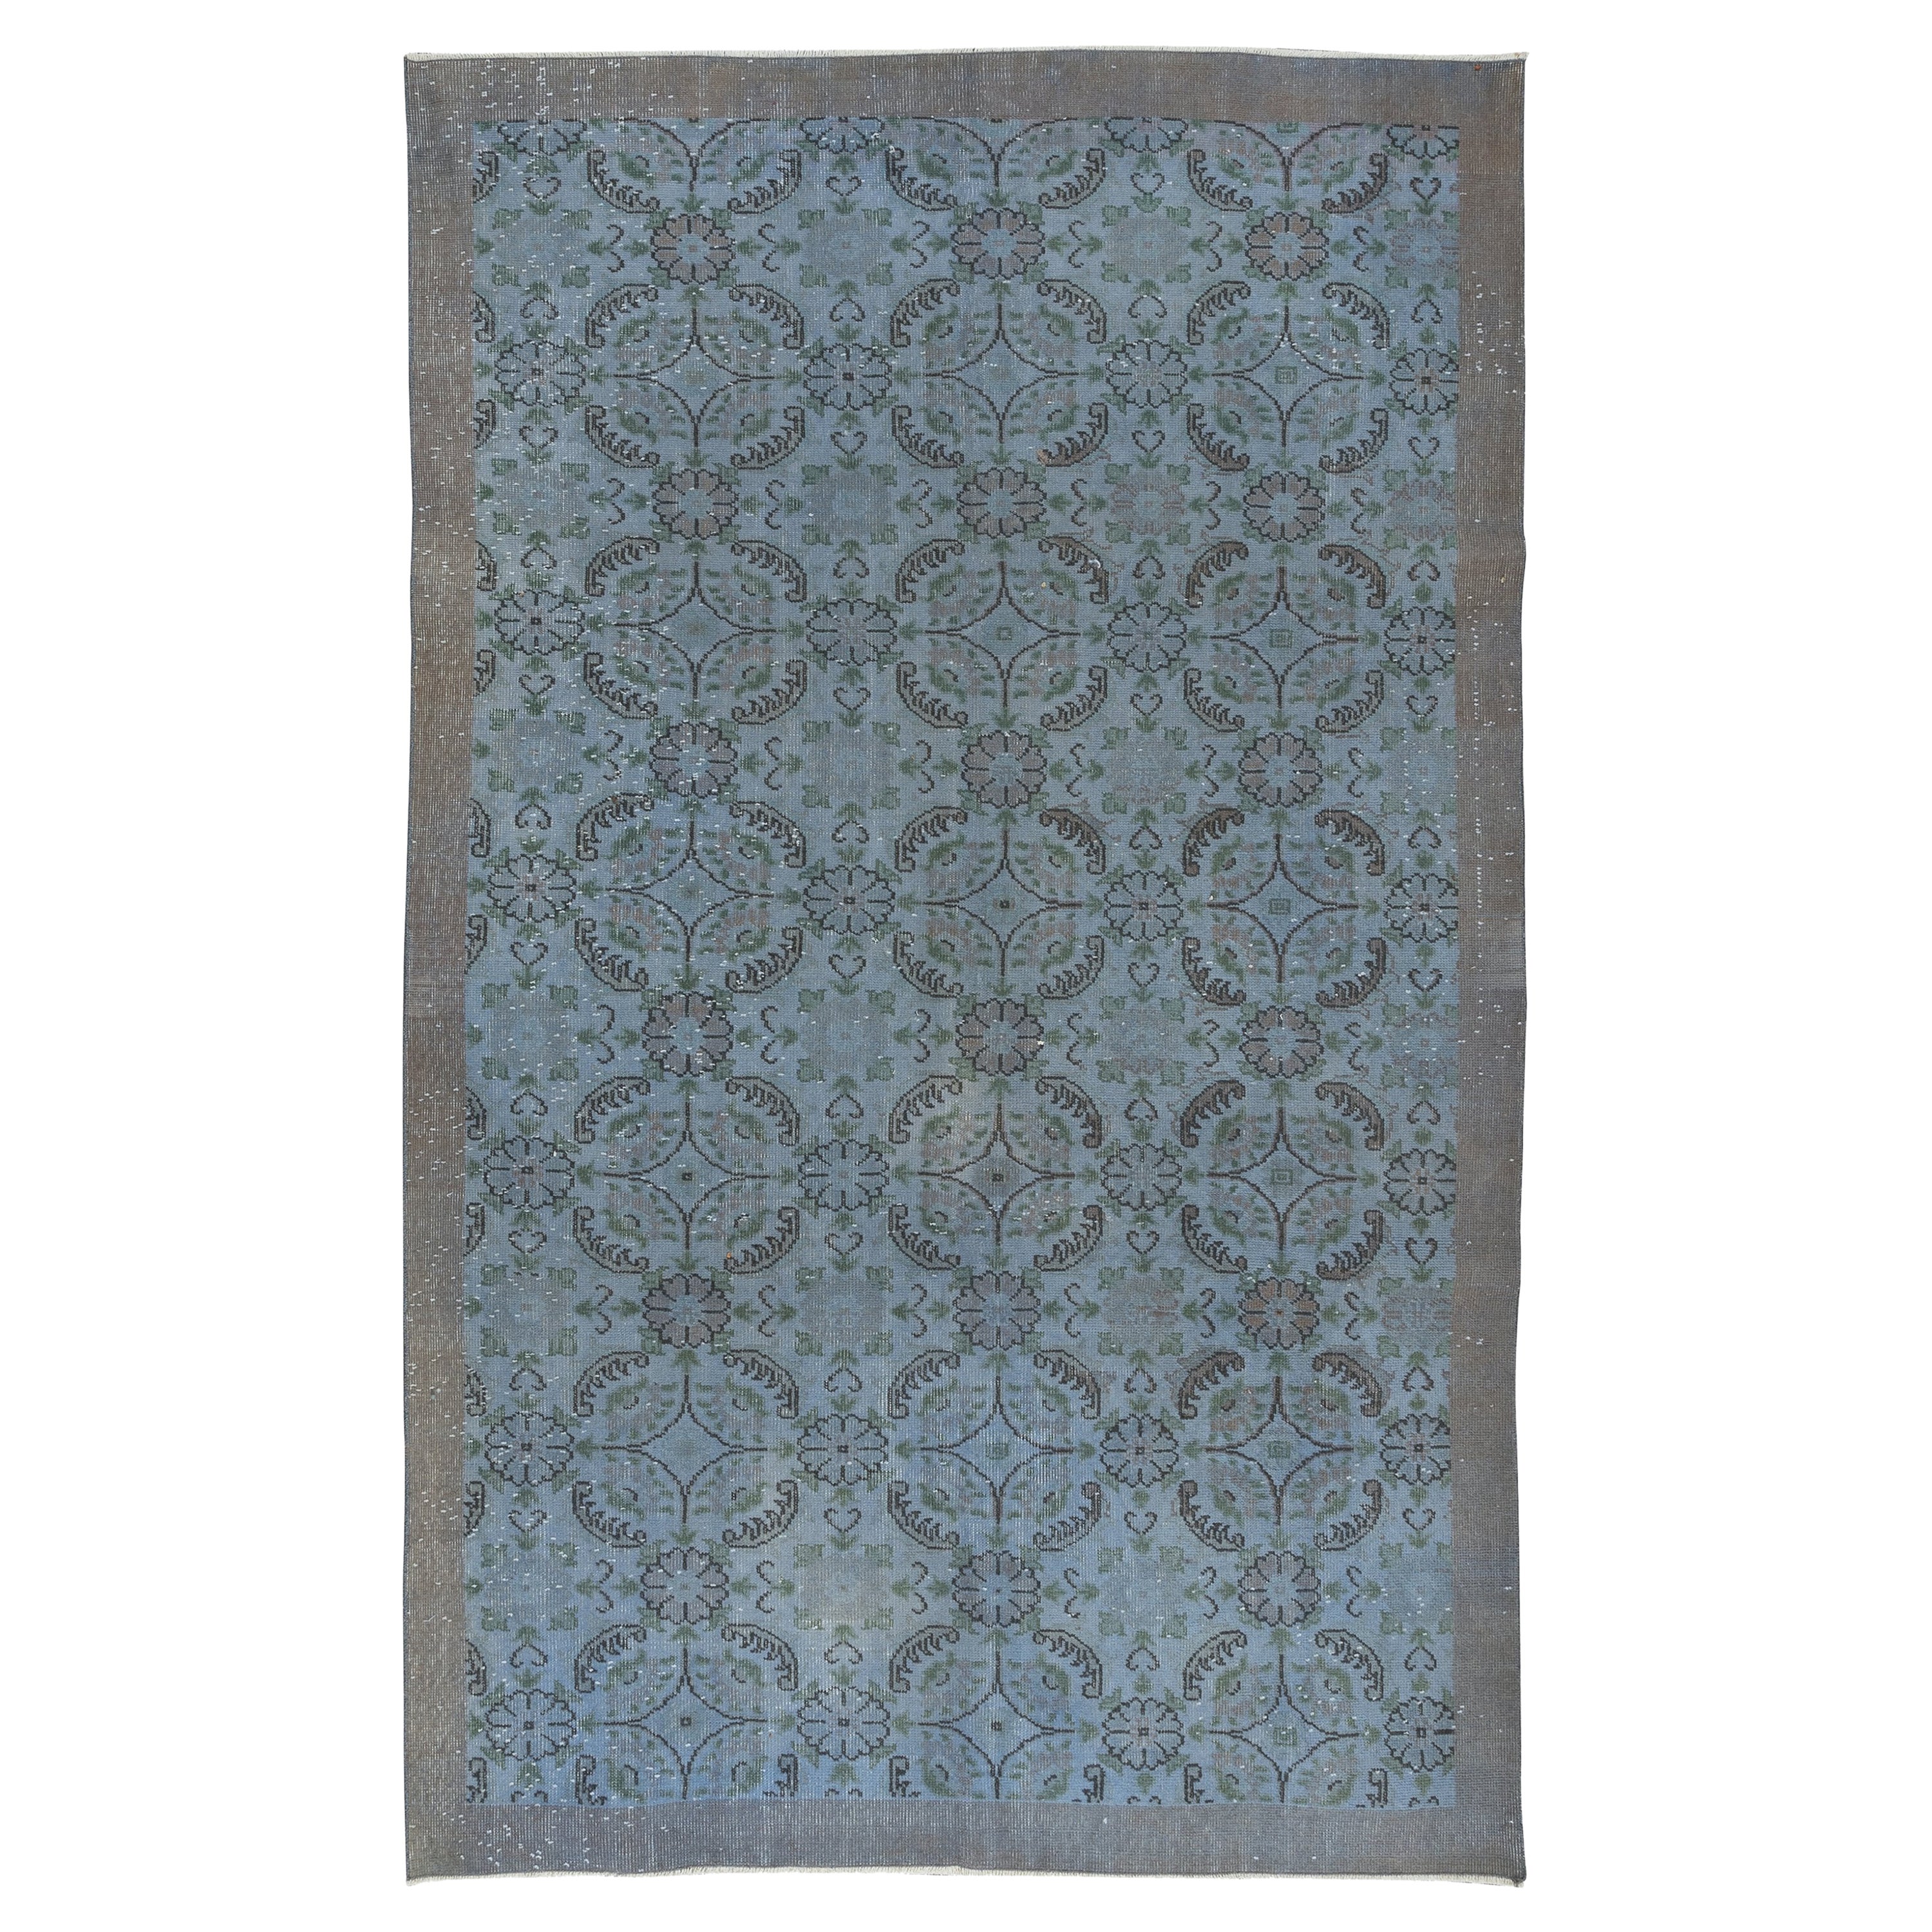 6x9.3 Ft Handmade Floral Turkish Rug with Solid Border & Light Blue Background